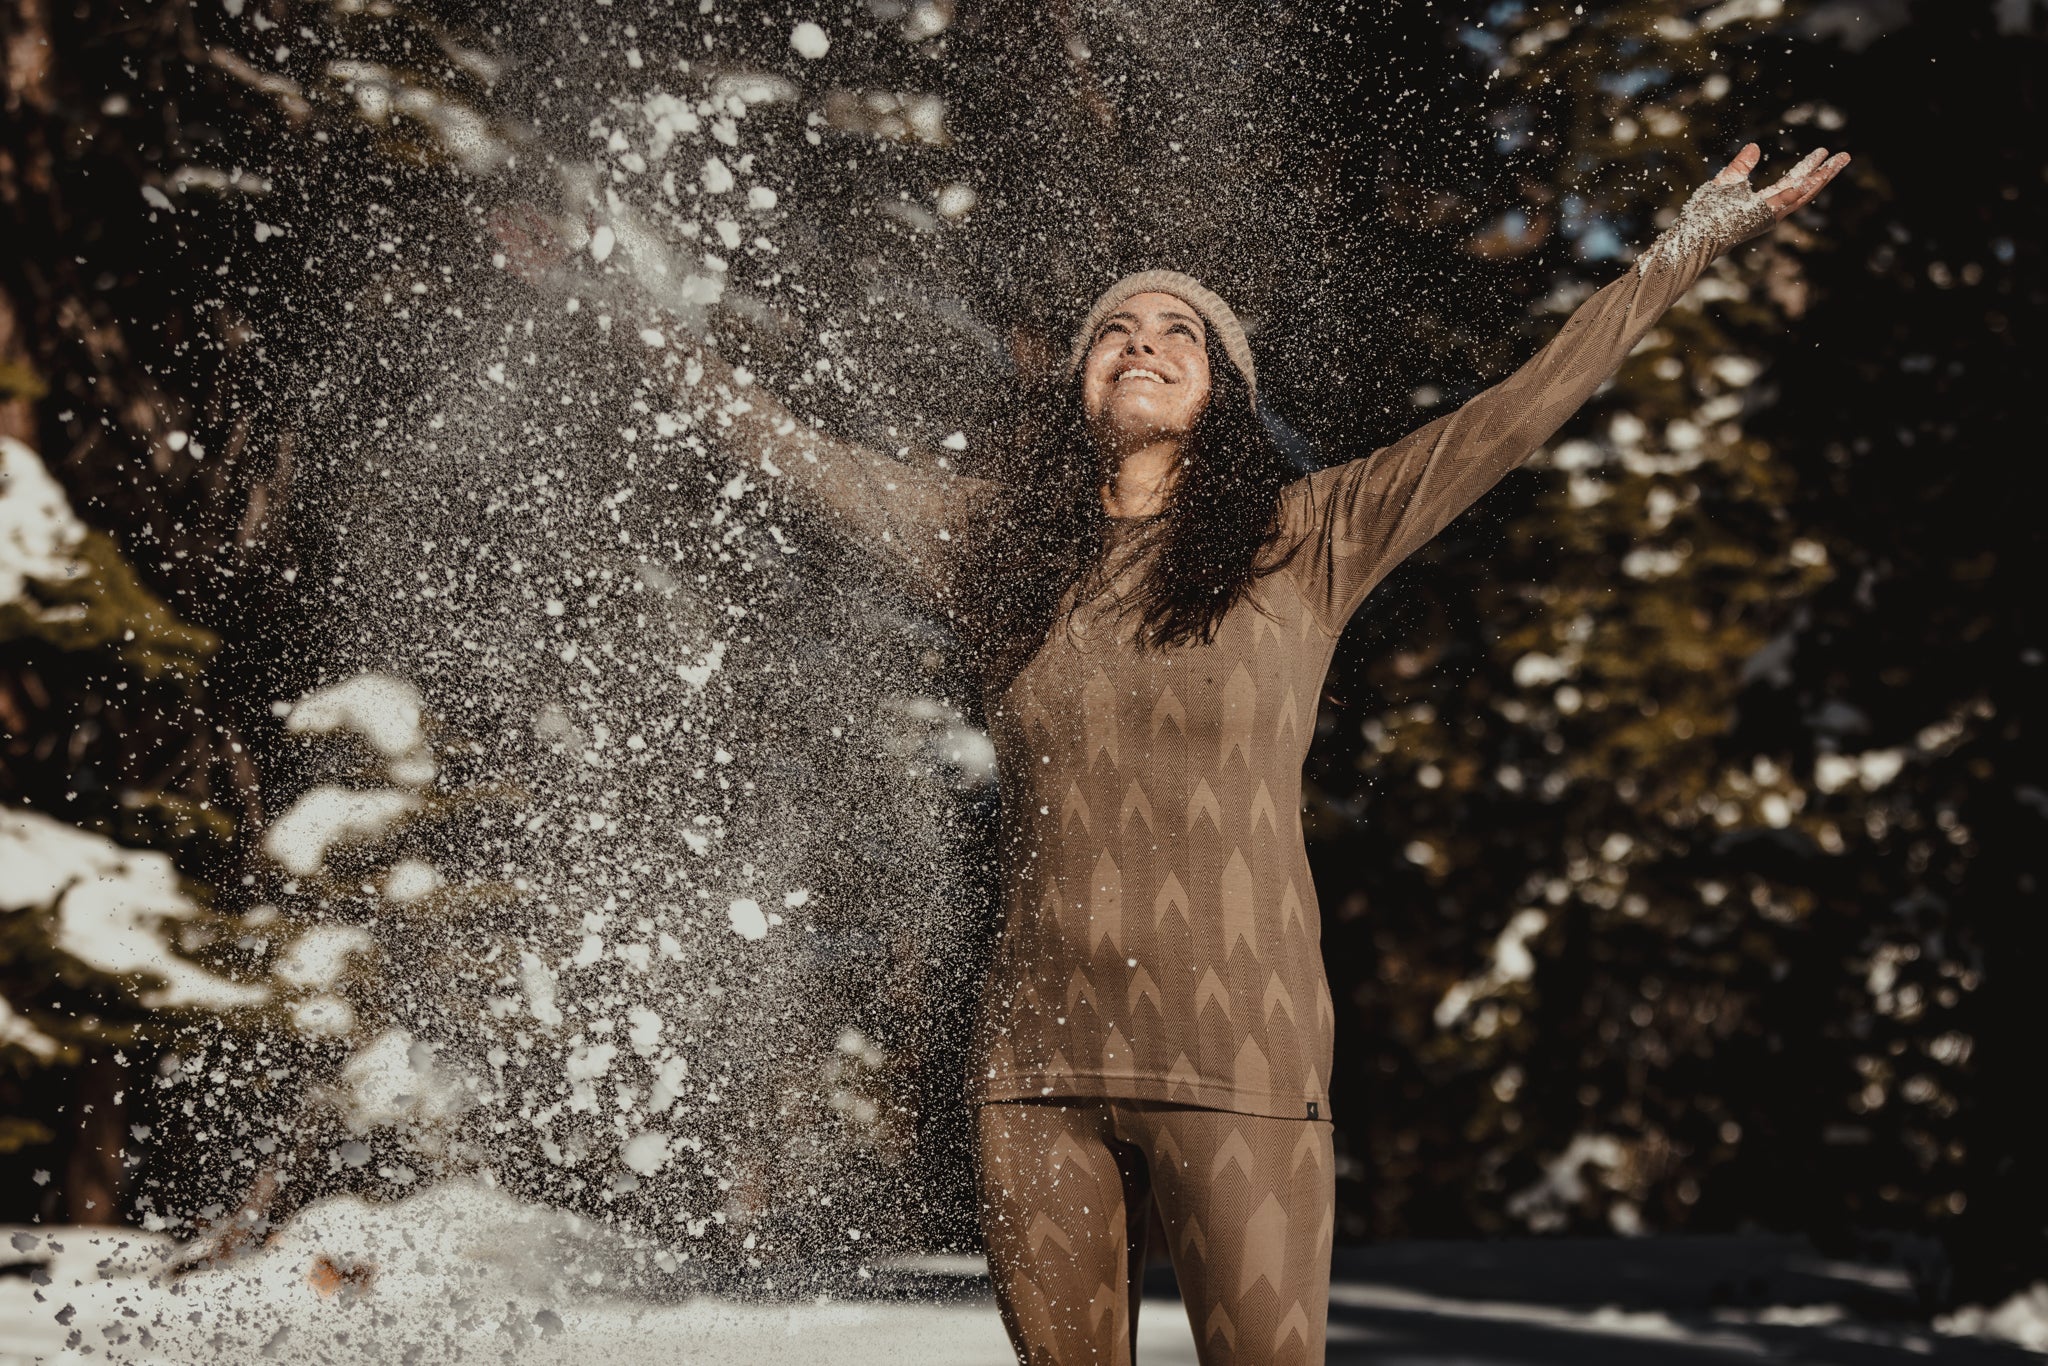 a woman wearing Ridge Merino layers throws snow in the air